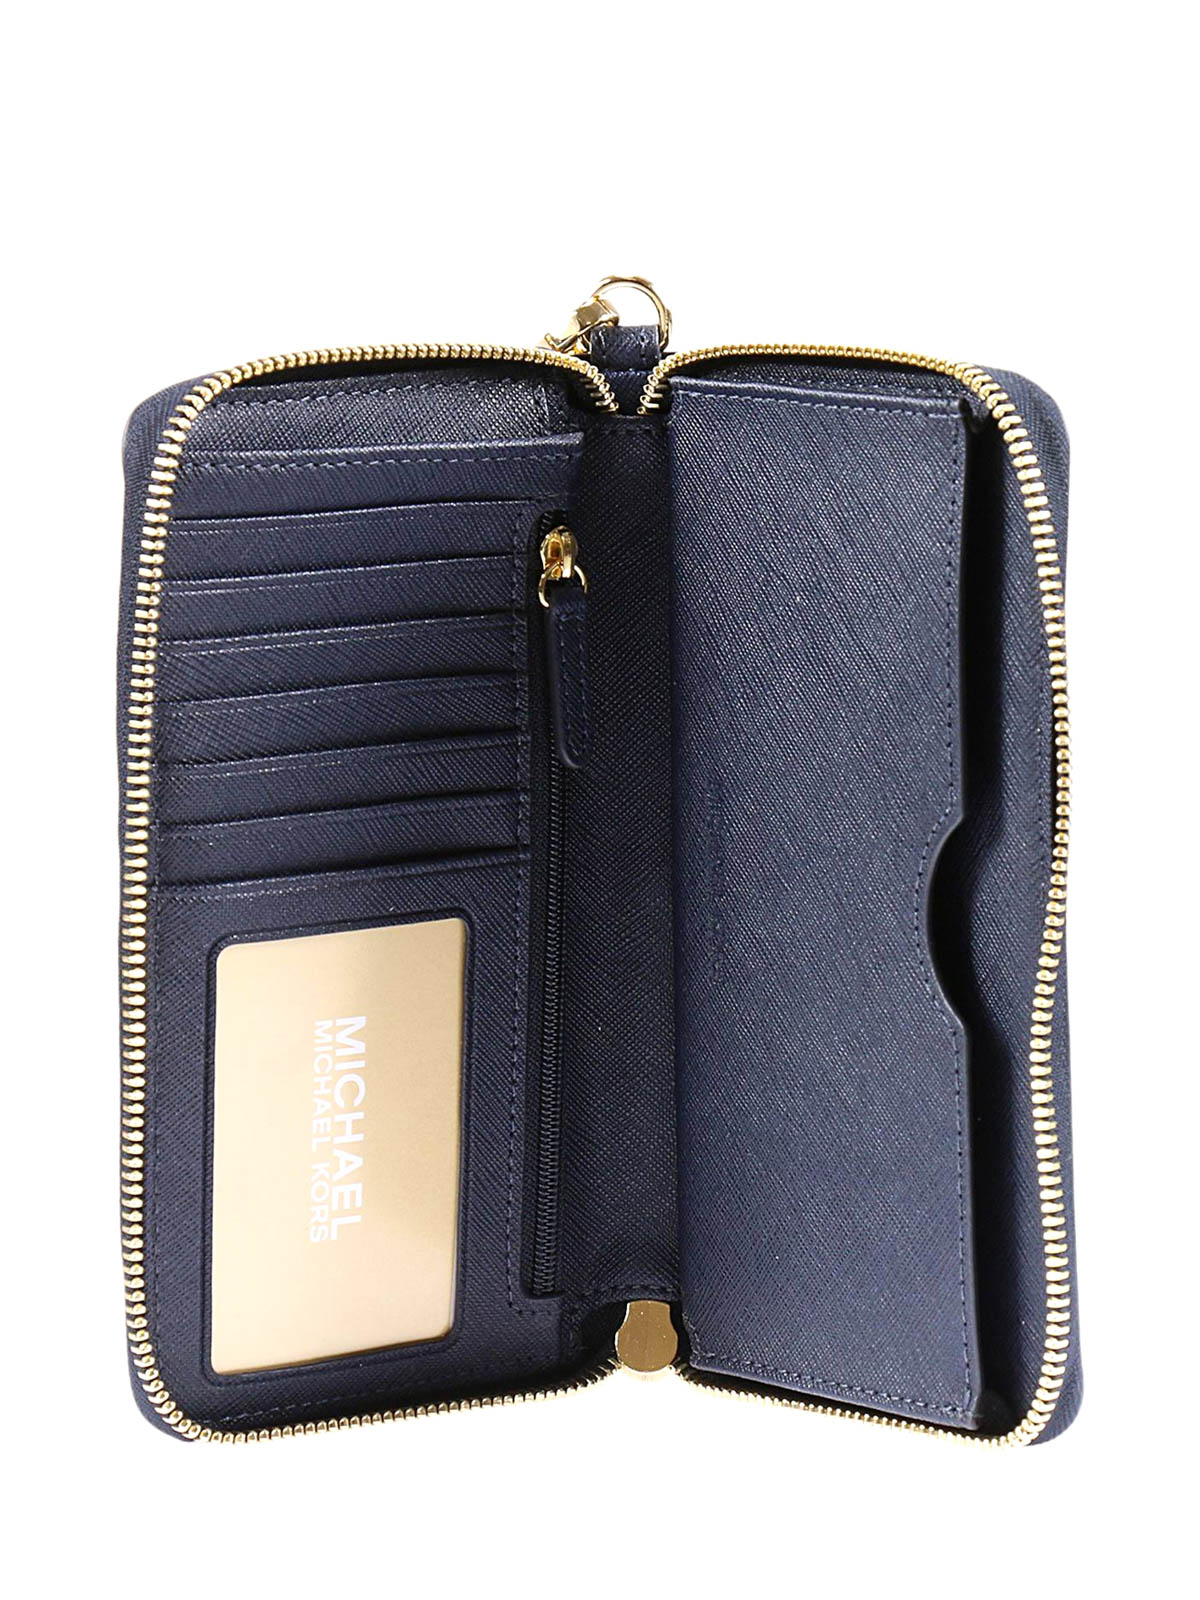 Jet Set Travel smartphone wallet by Michael Kors - wallets & purses | iKRIX